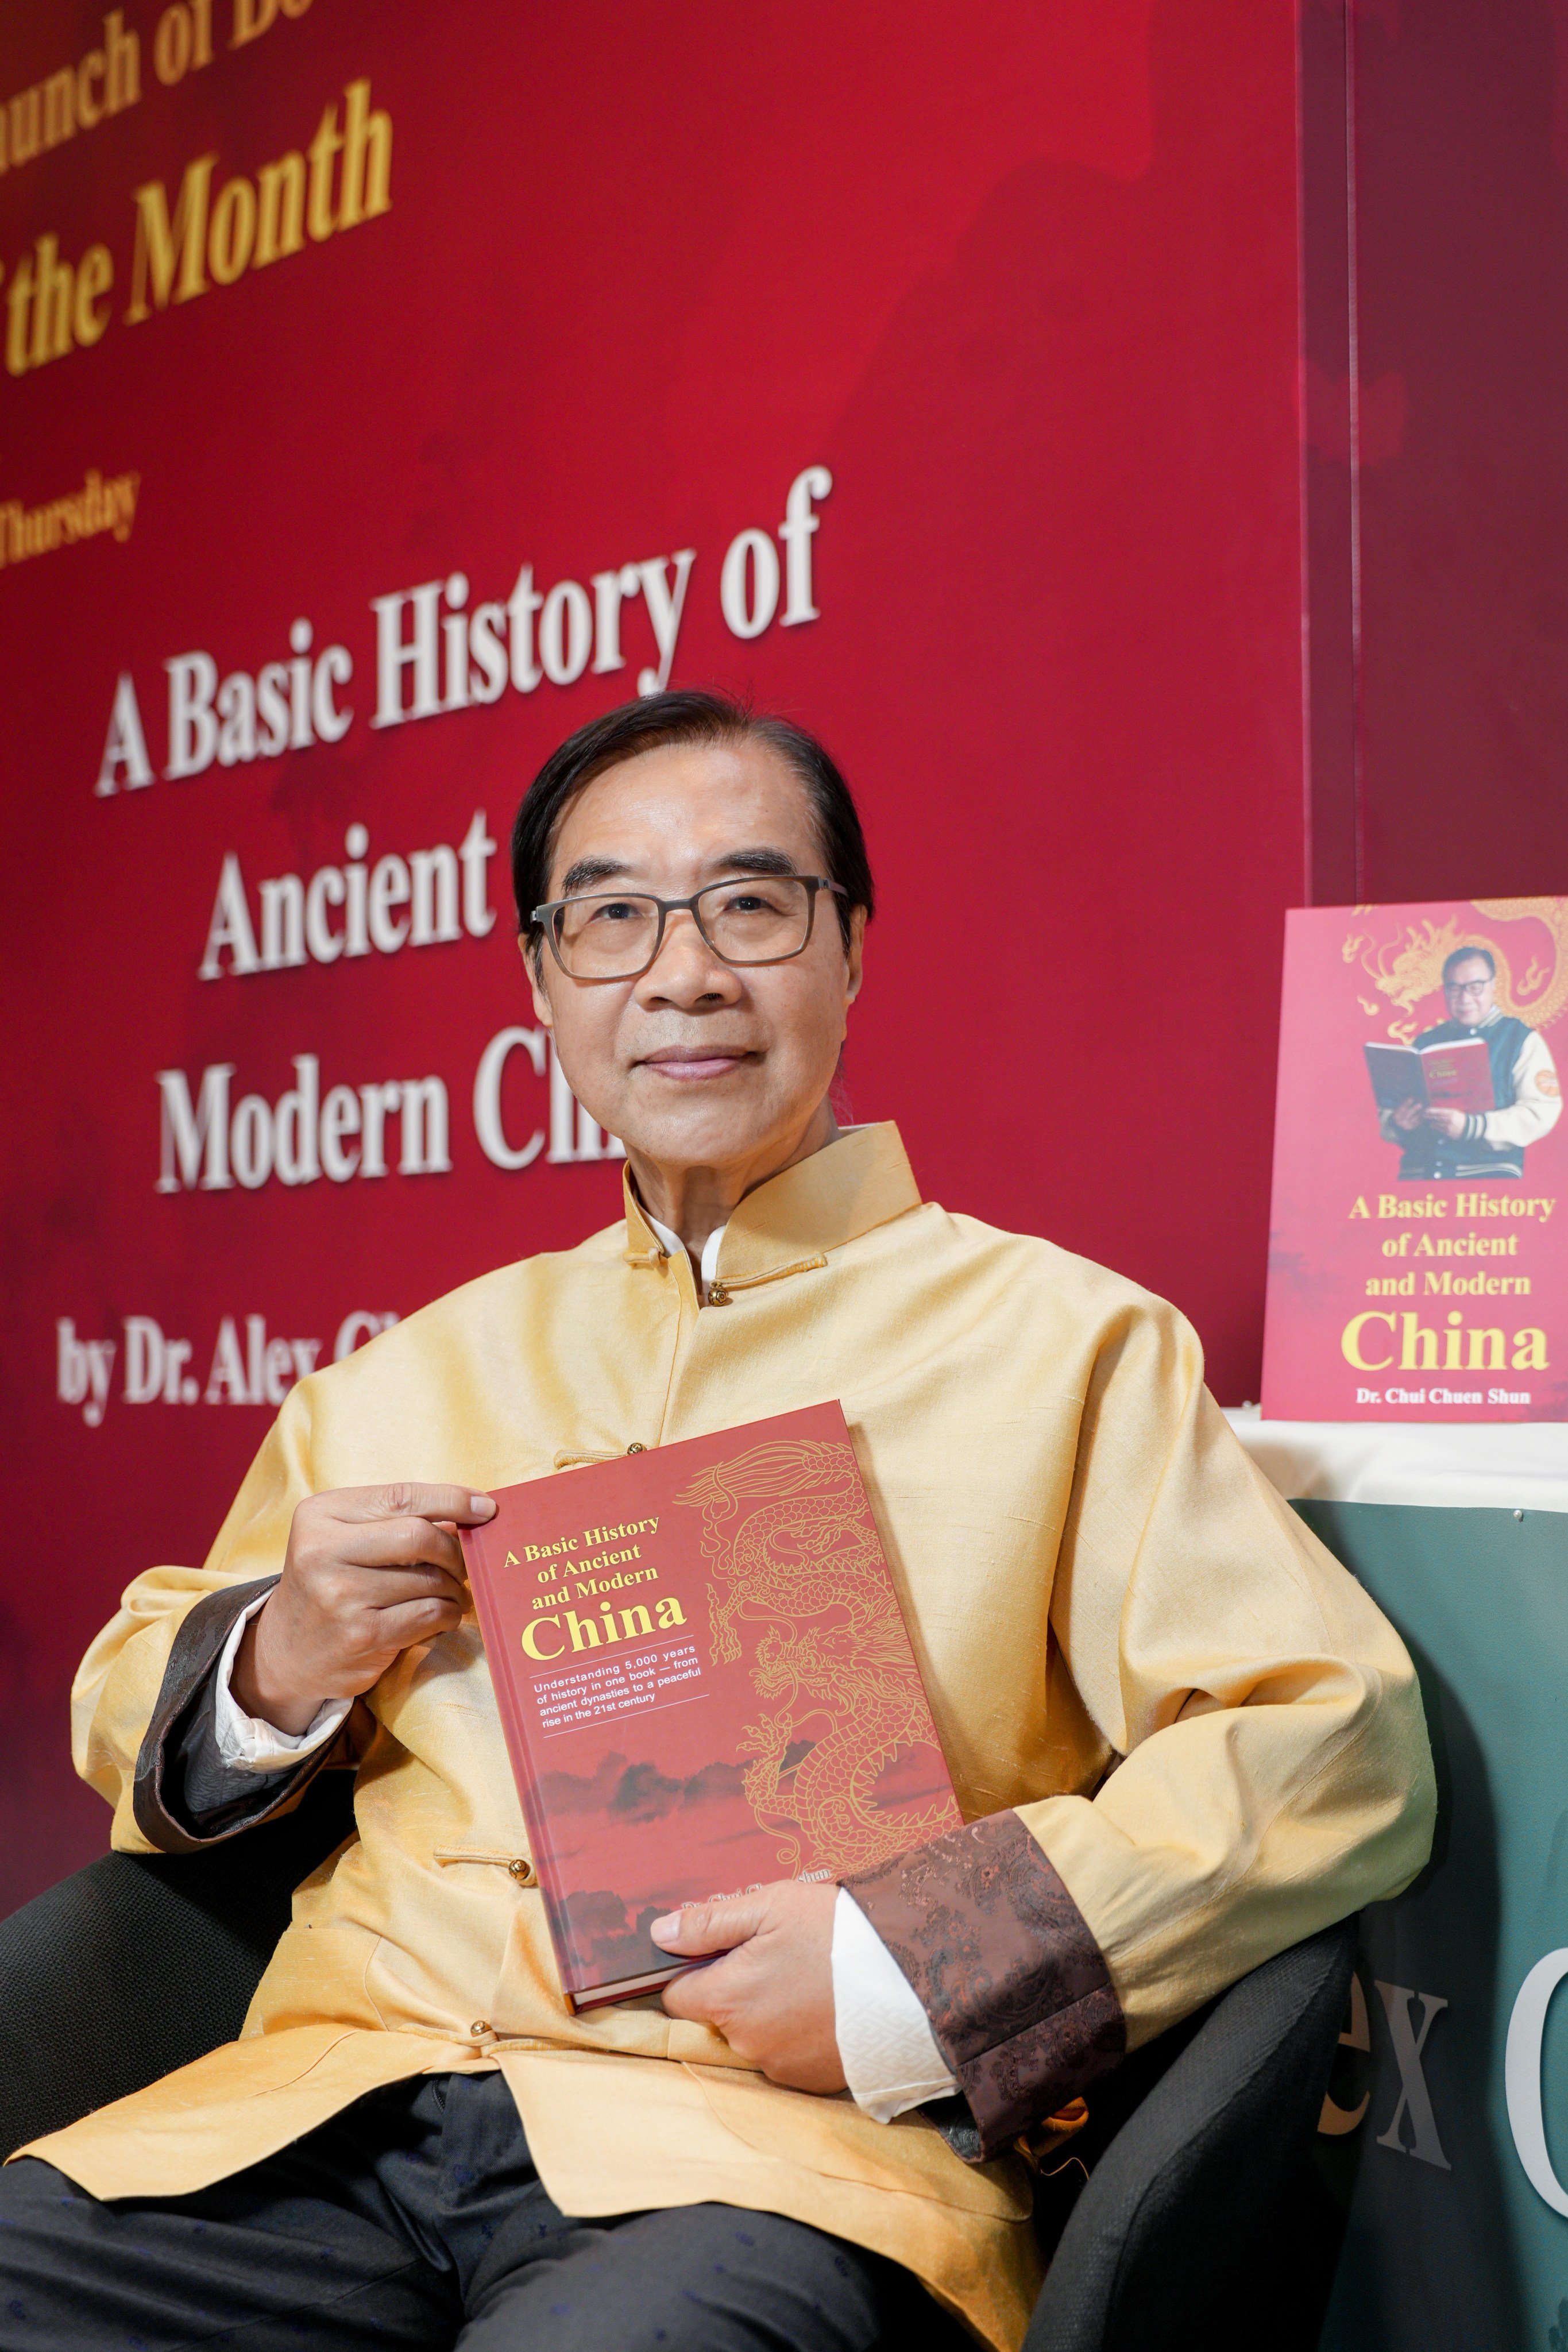 Hong Kong-born author Chui Chuen-shun. Photo: courtesy of Chui Chuen-shun